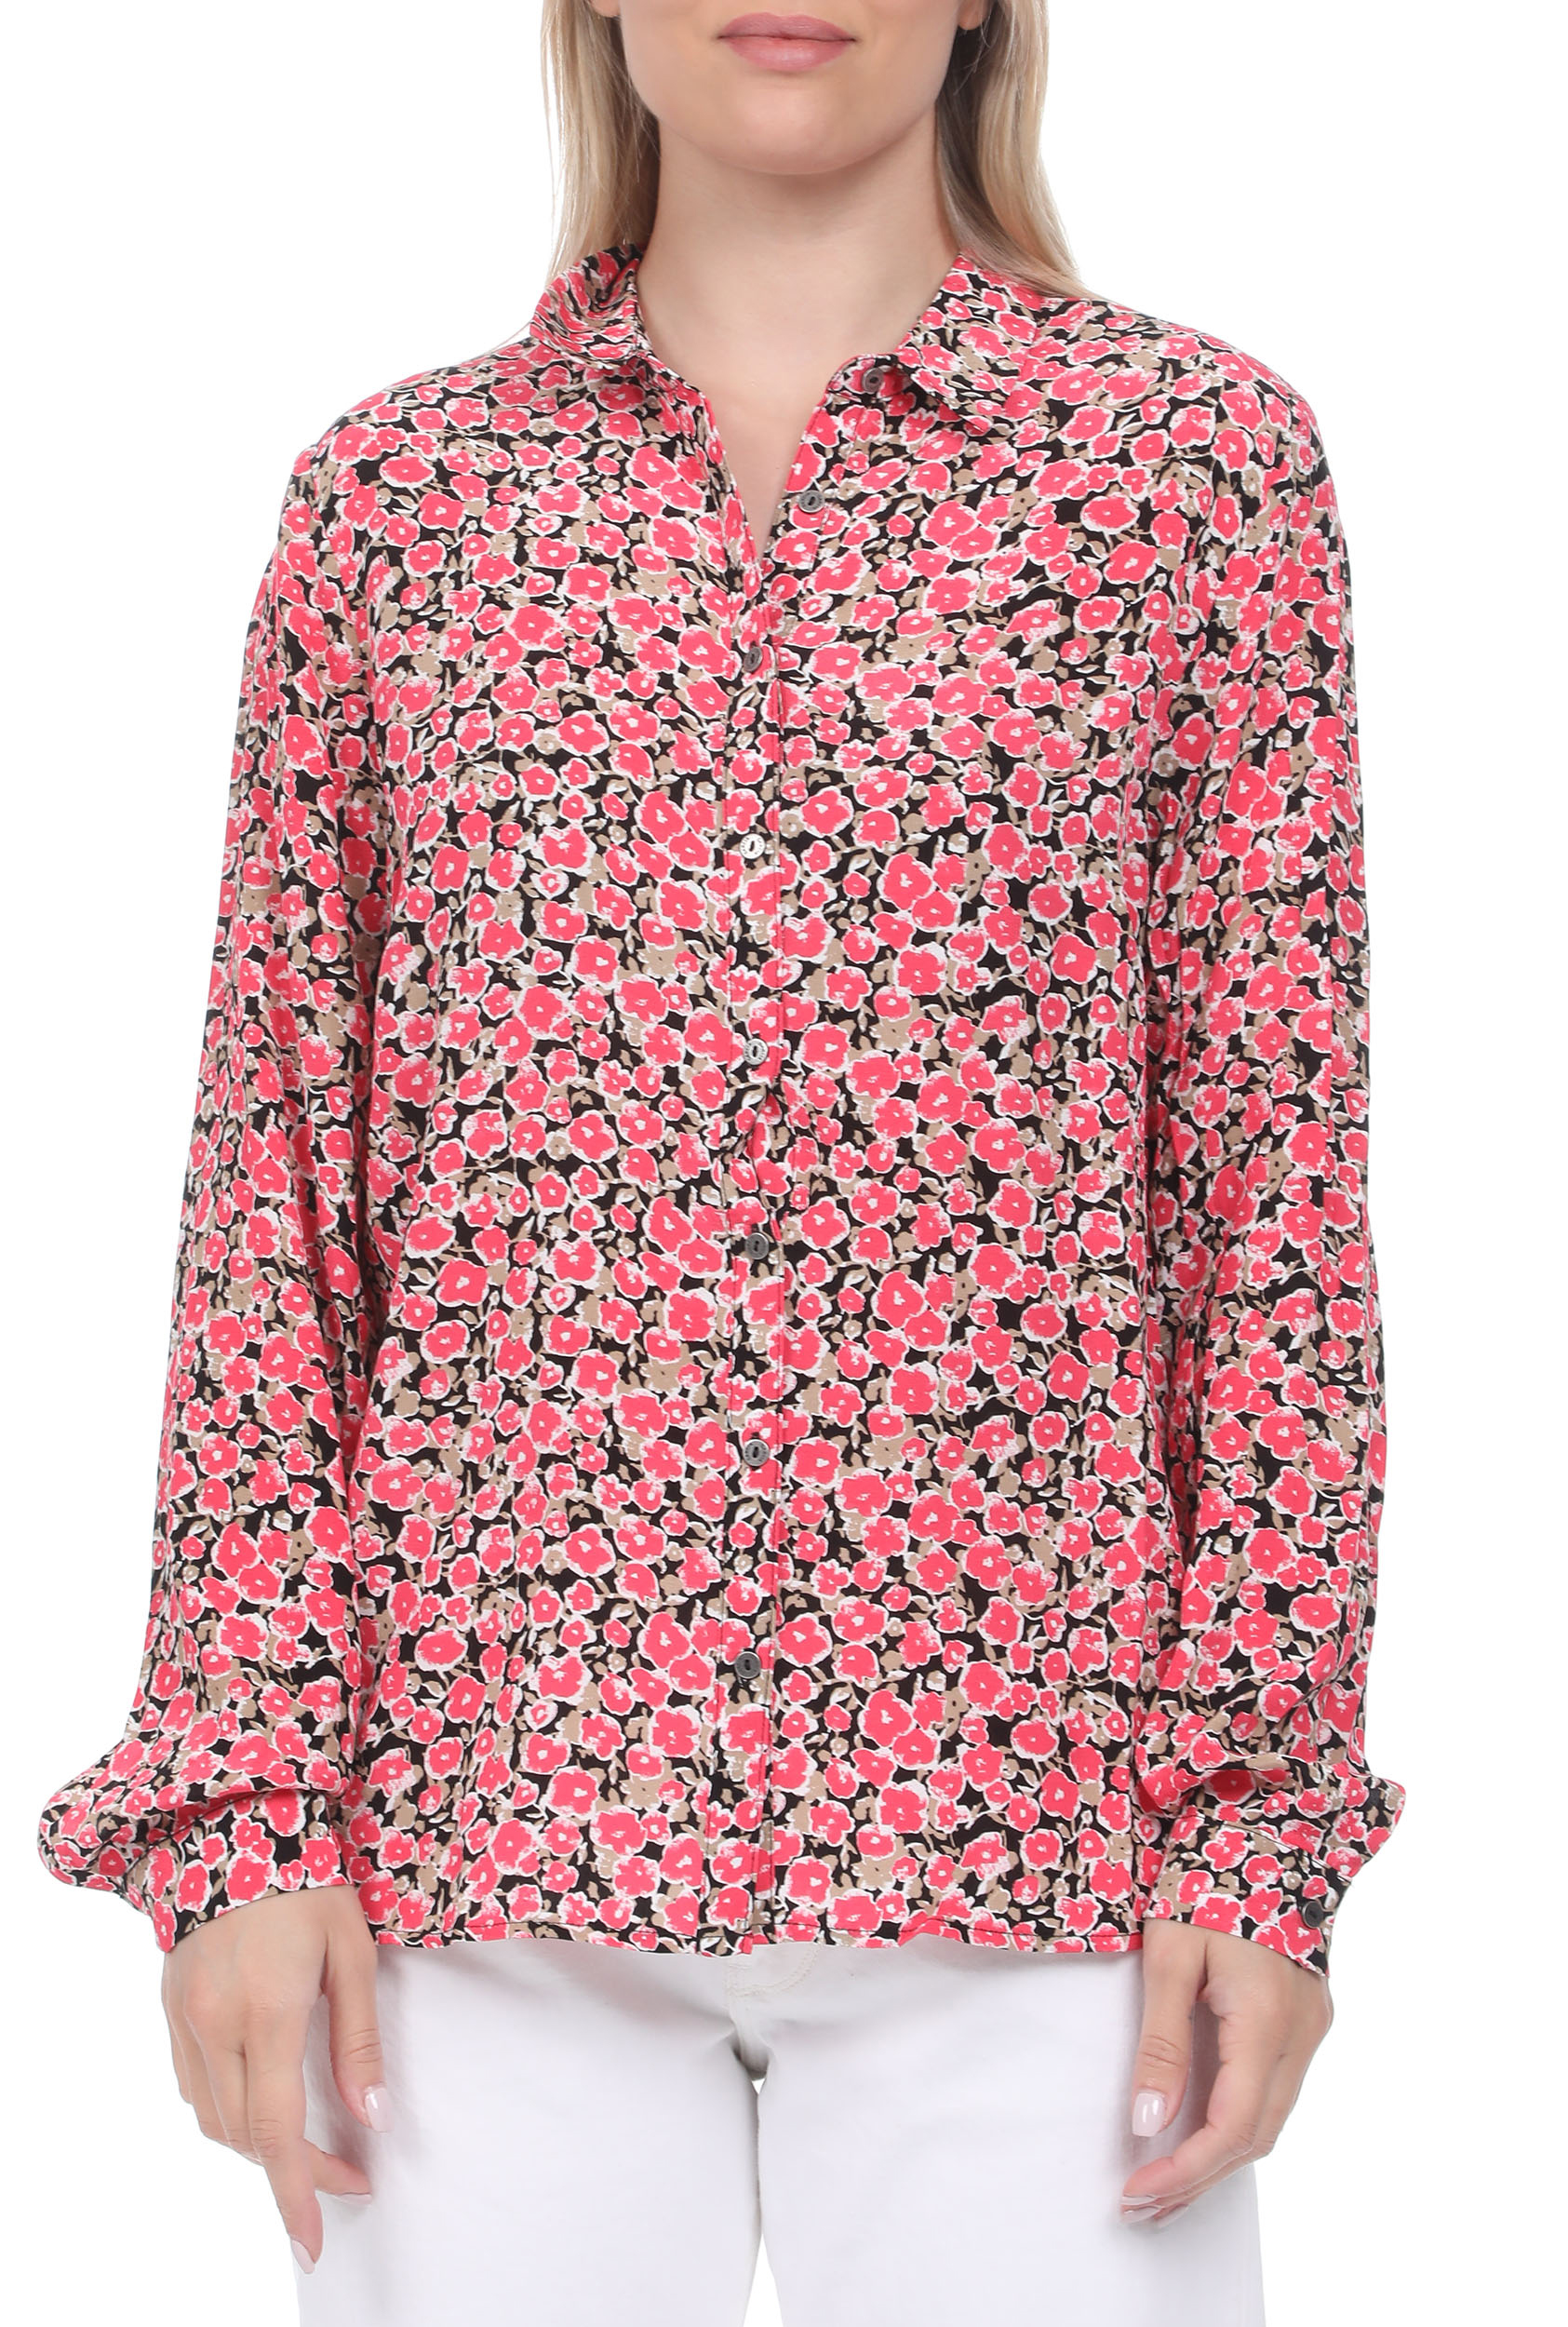 GARCIA JEANS – Γυναικείο πουκάμισο GARCIA JEANS ροζ 1811364.0-00P7